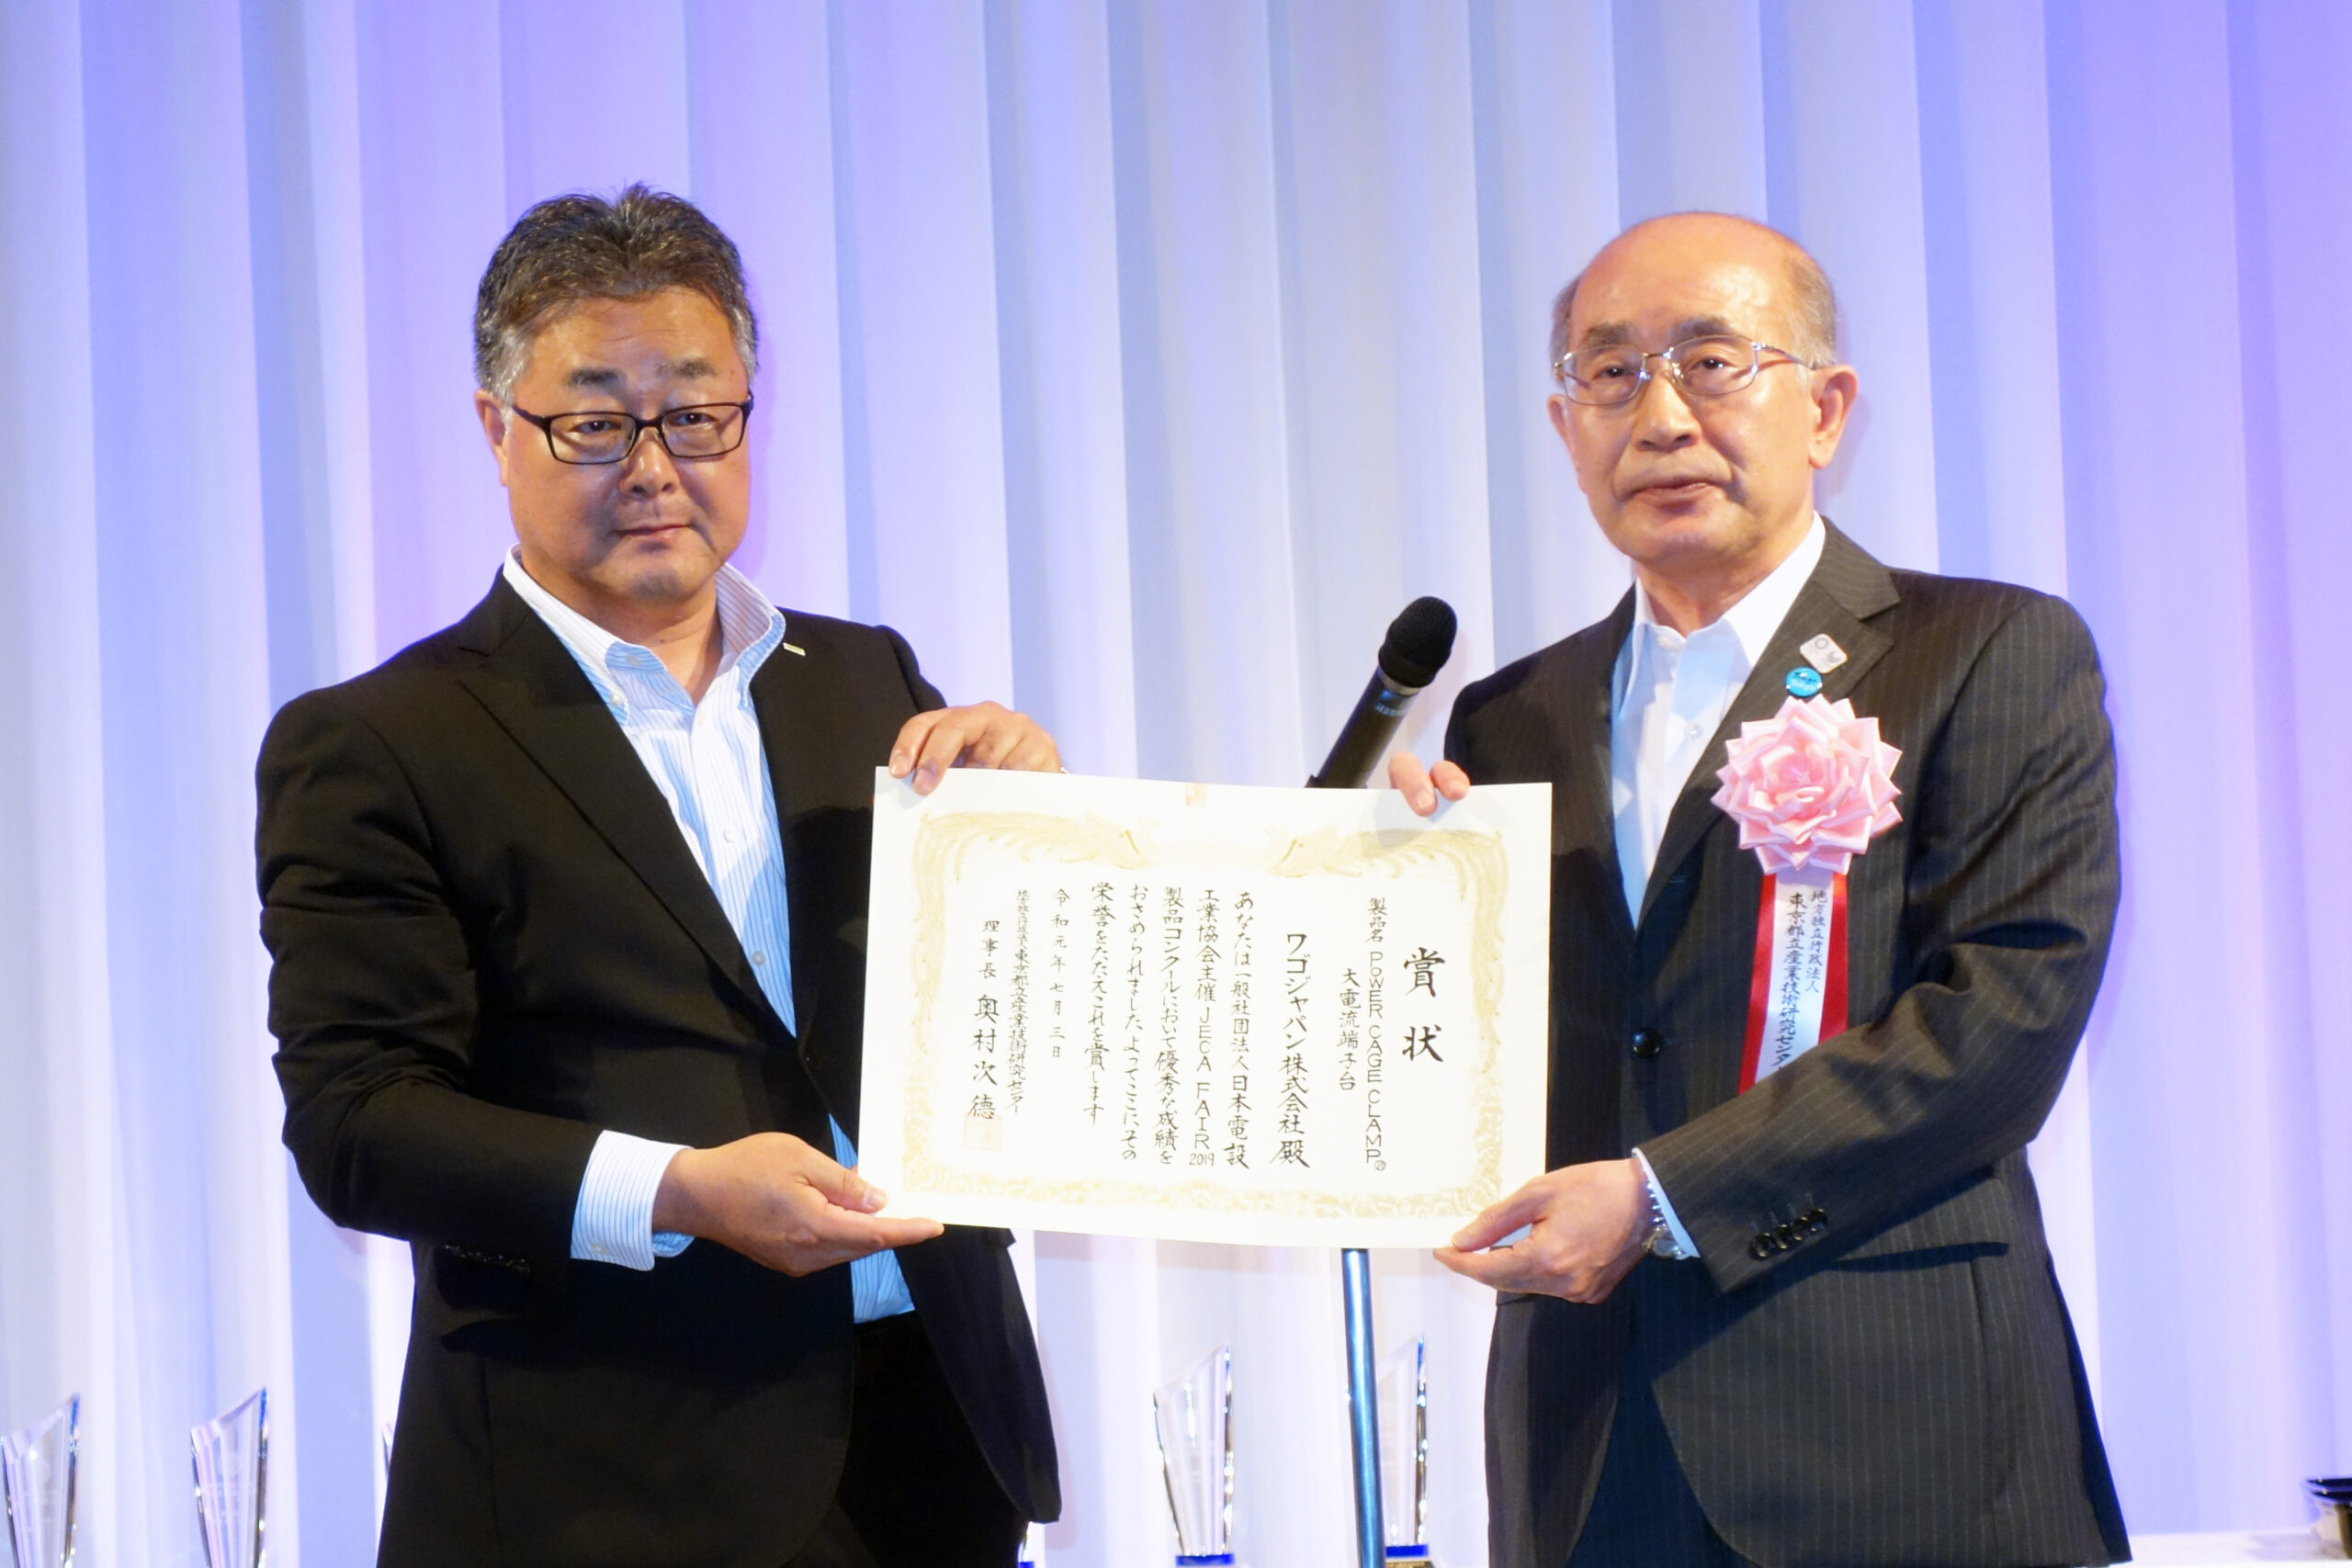 JECA FAIR 2019「第58回製品コンクール」ワゴジャパンに栄誉